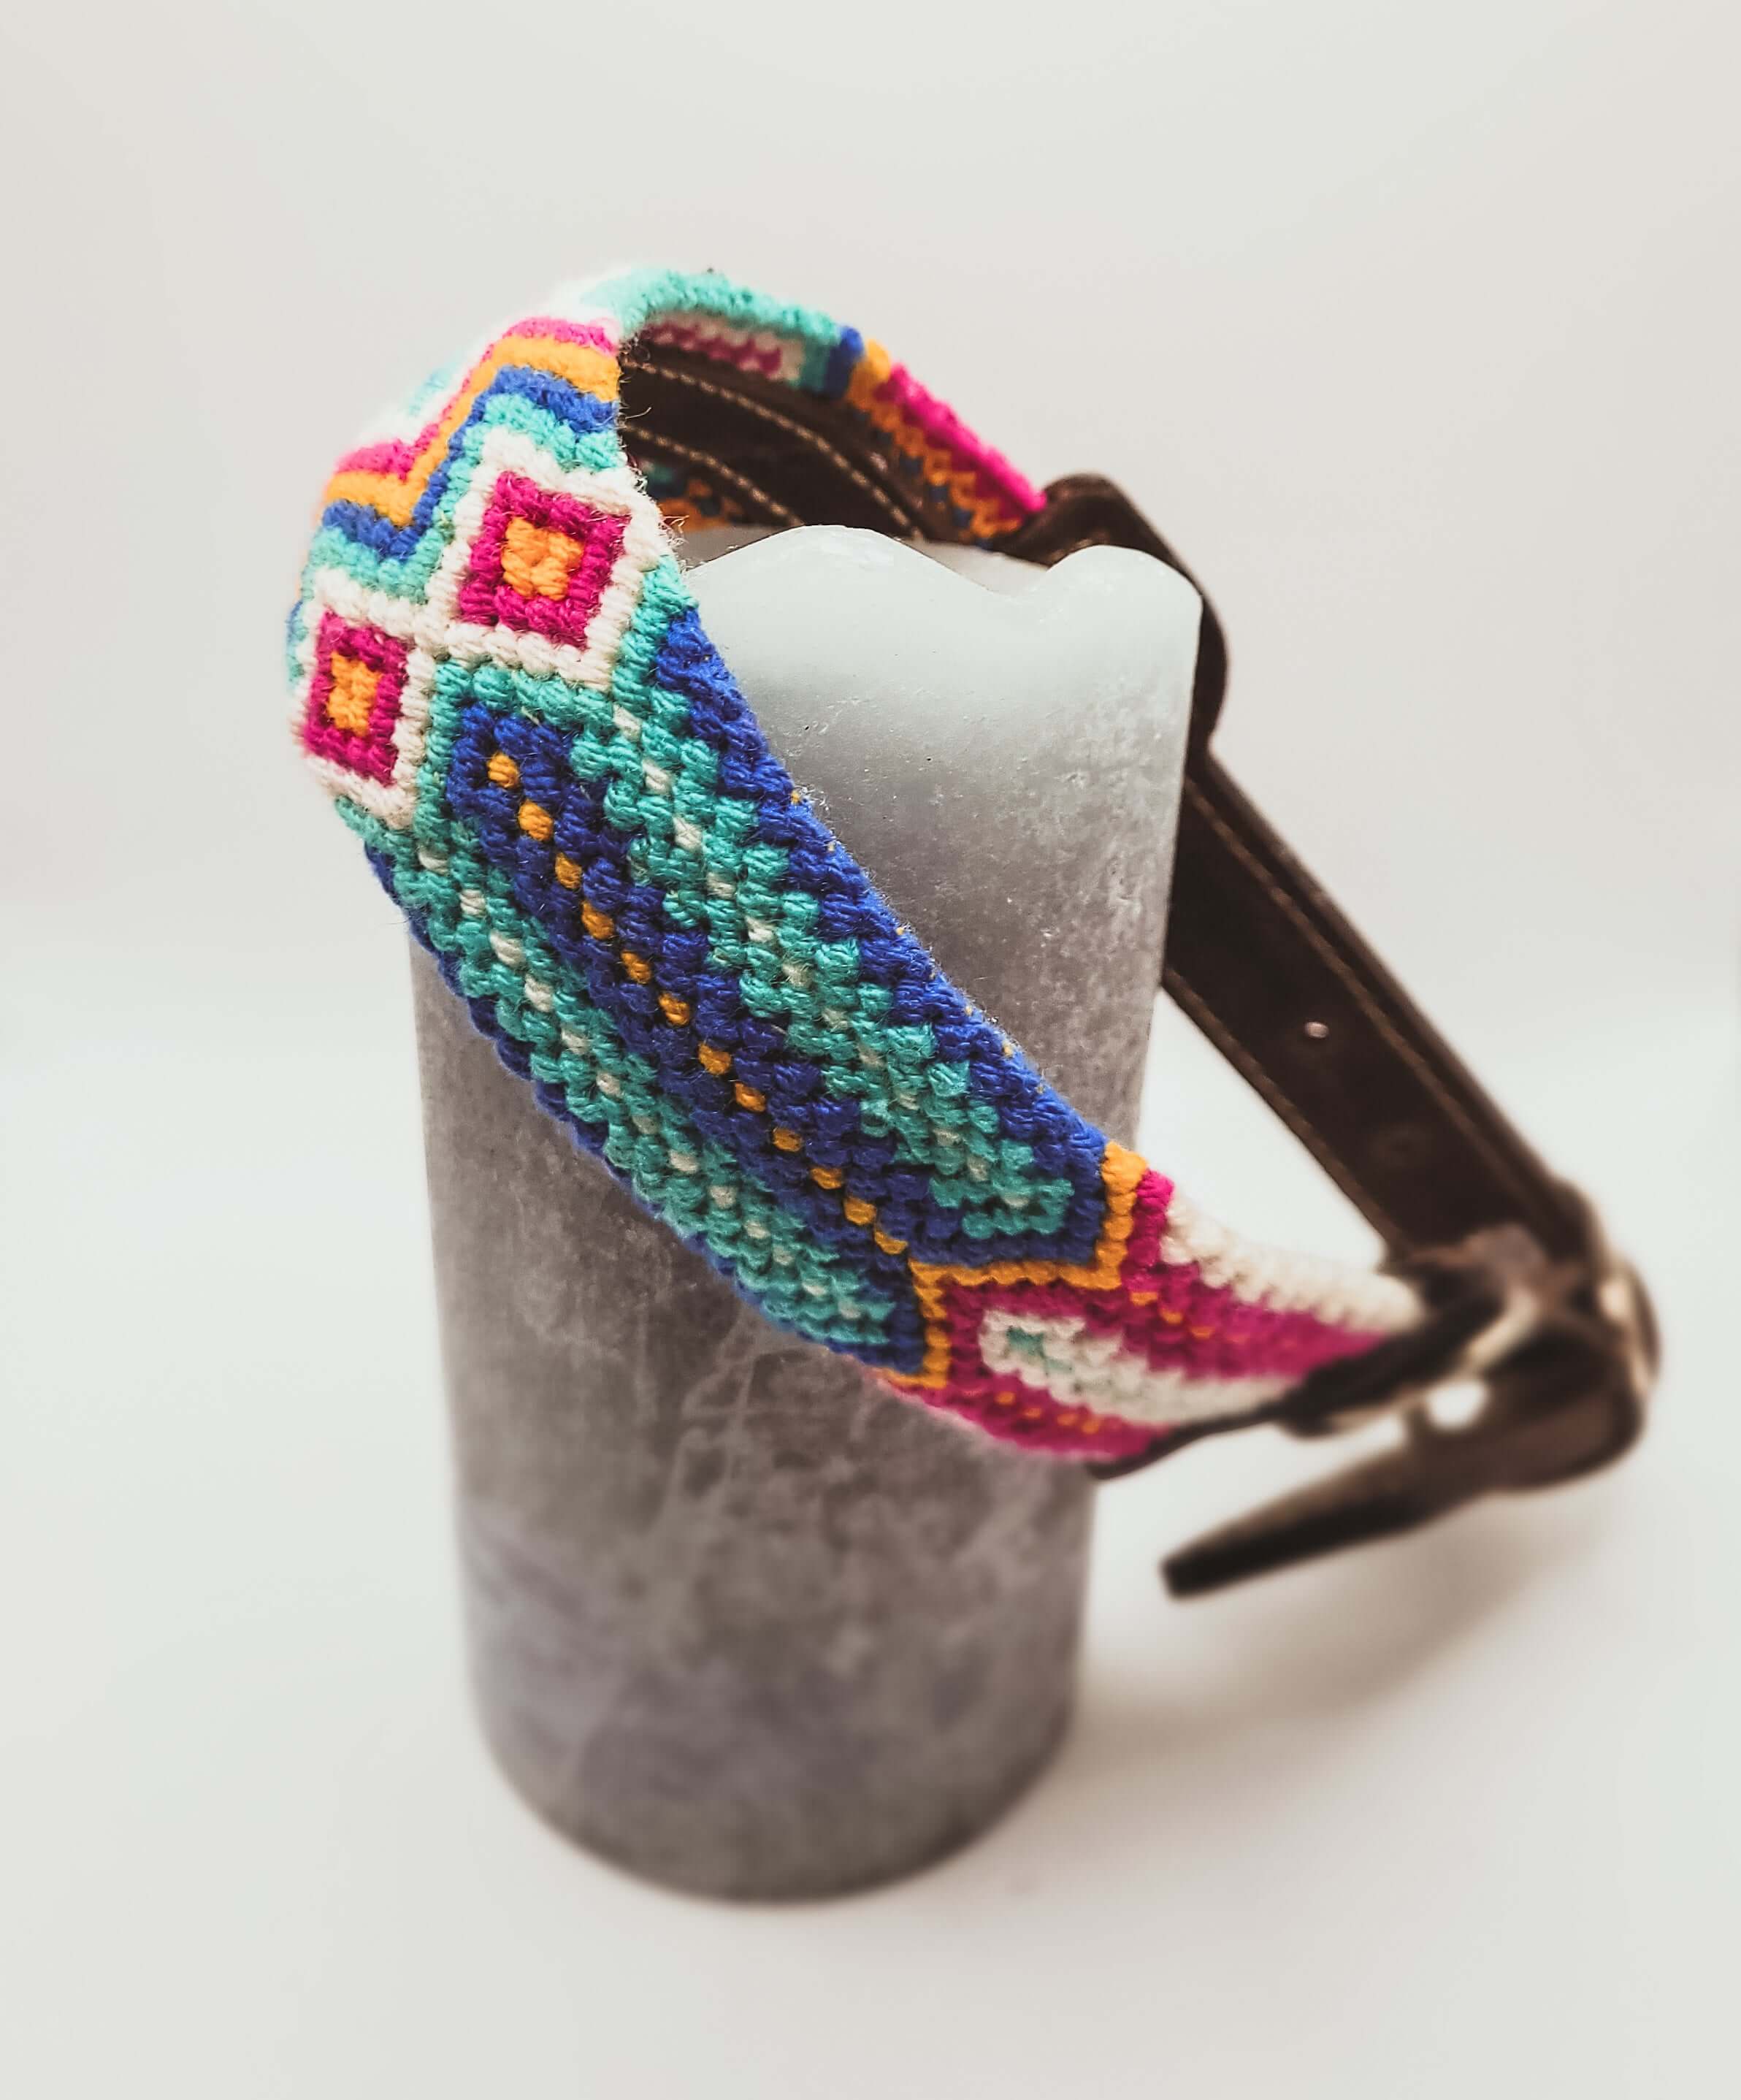 River blue and pink woven dog collar handmade by Wayuu artisans